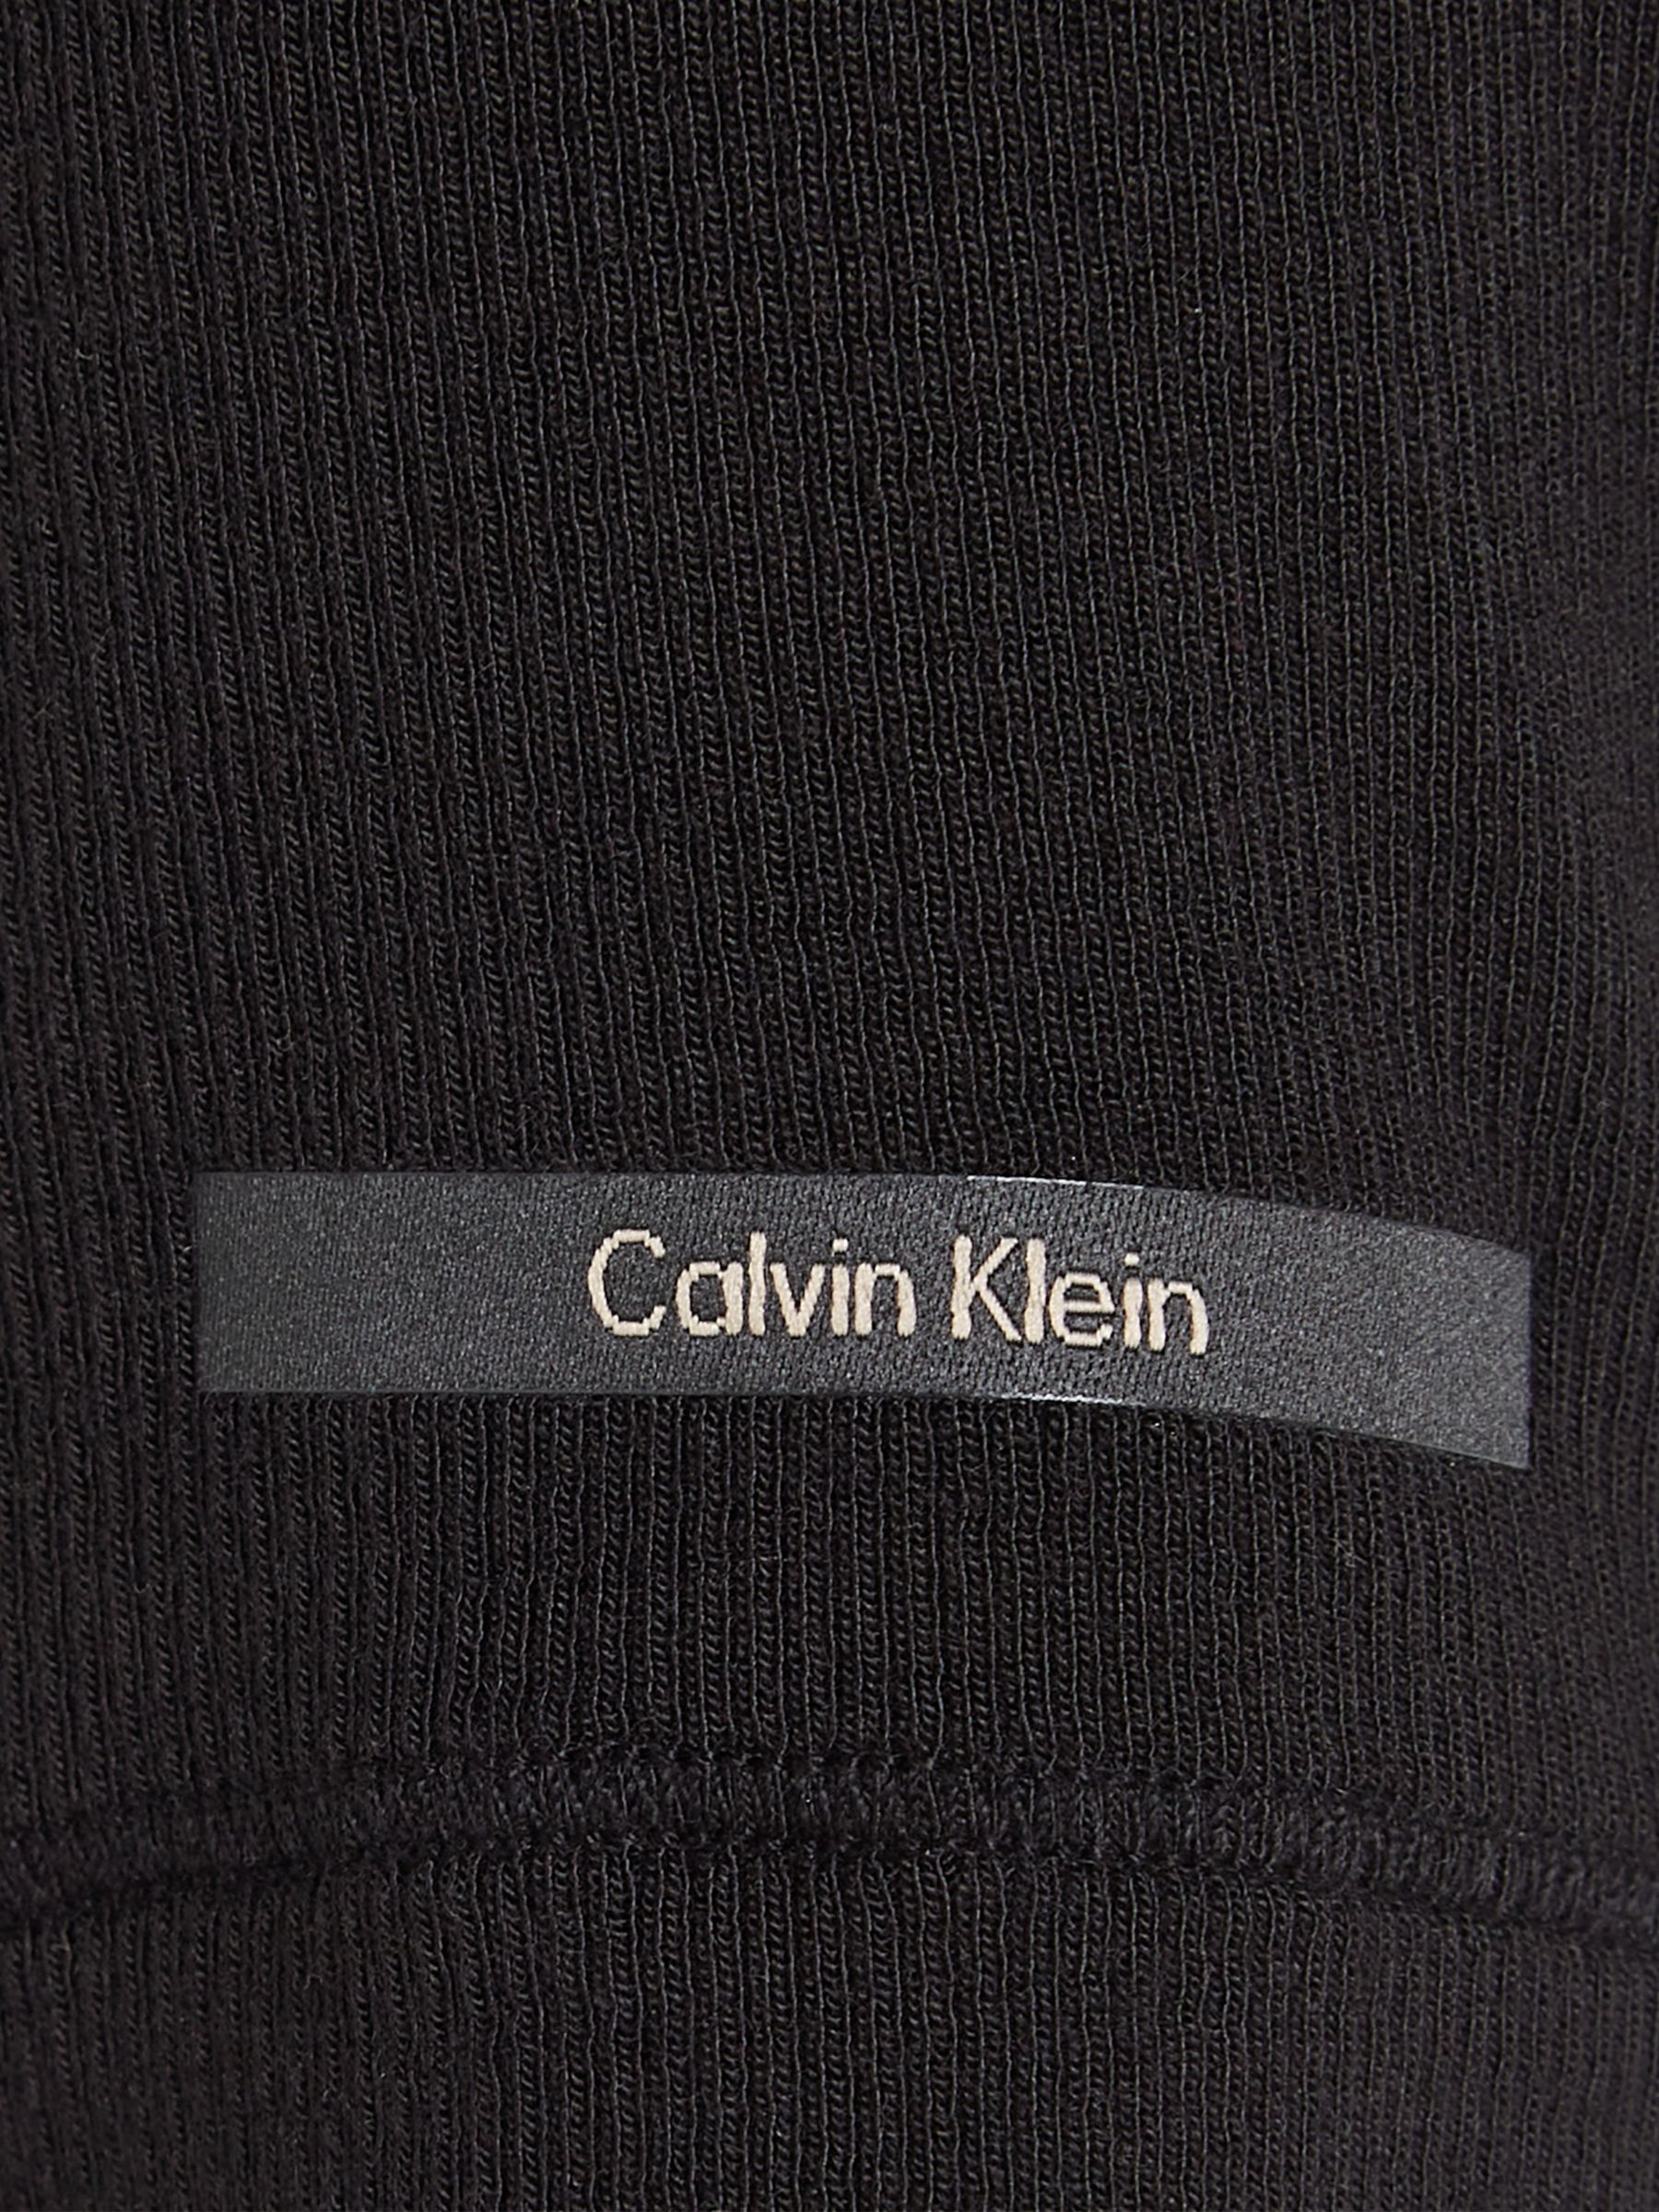 Buy Calvin Klein Modal Rib Short Sleeve T-Shirt Online at johnlewis.com